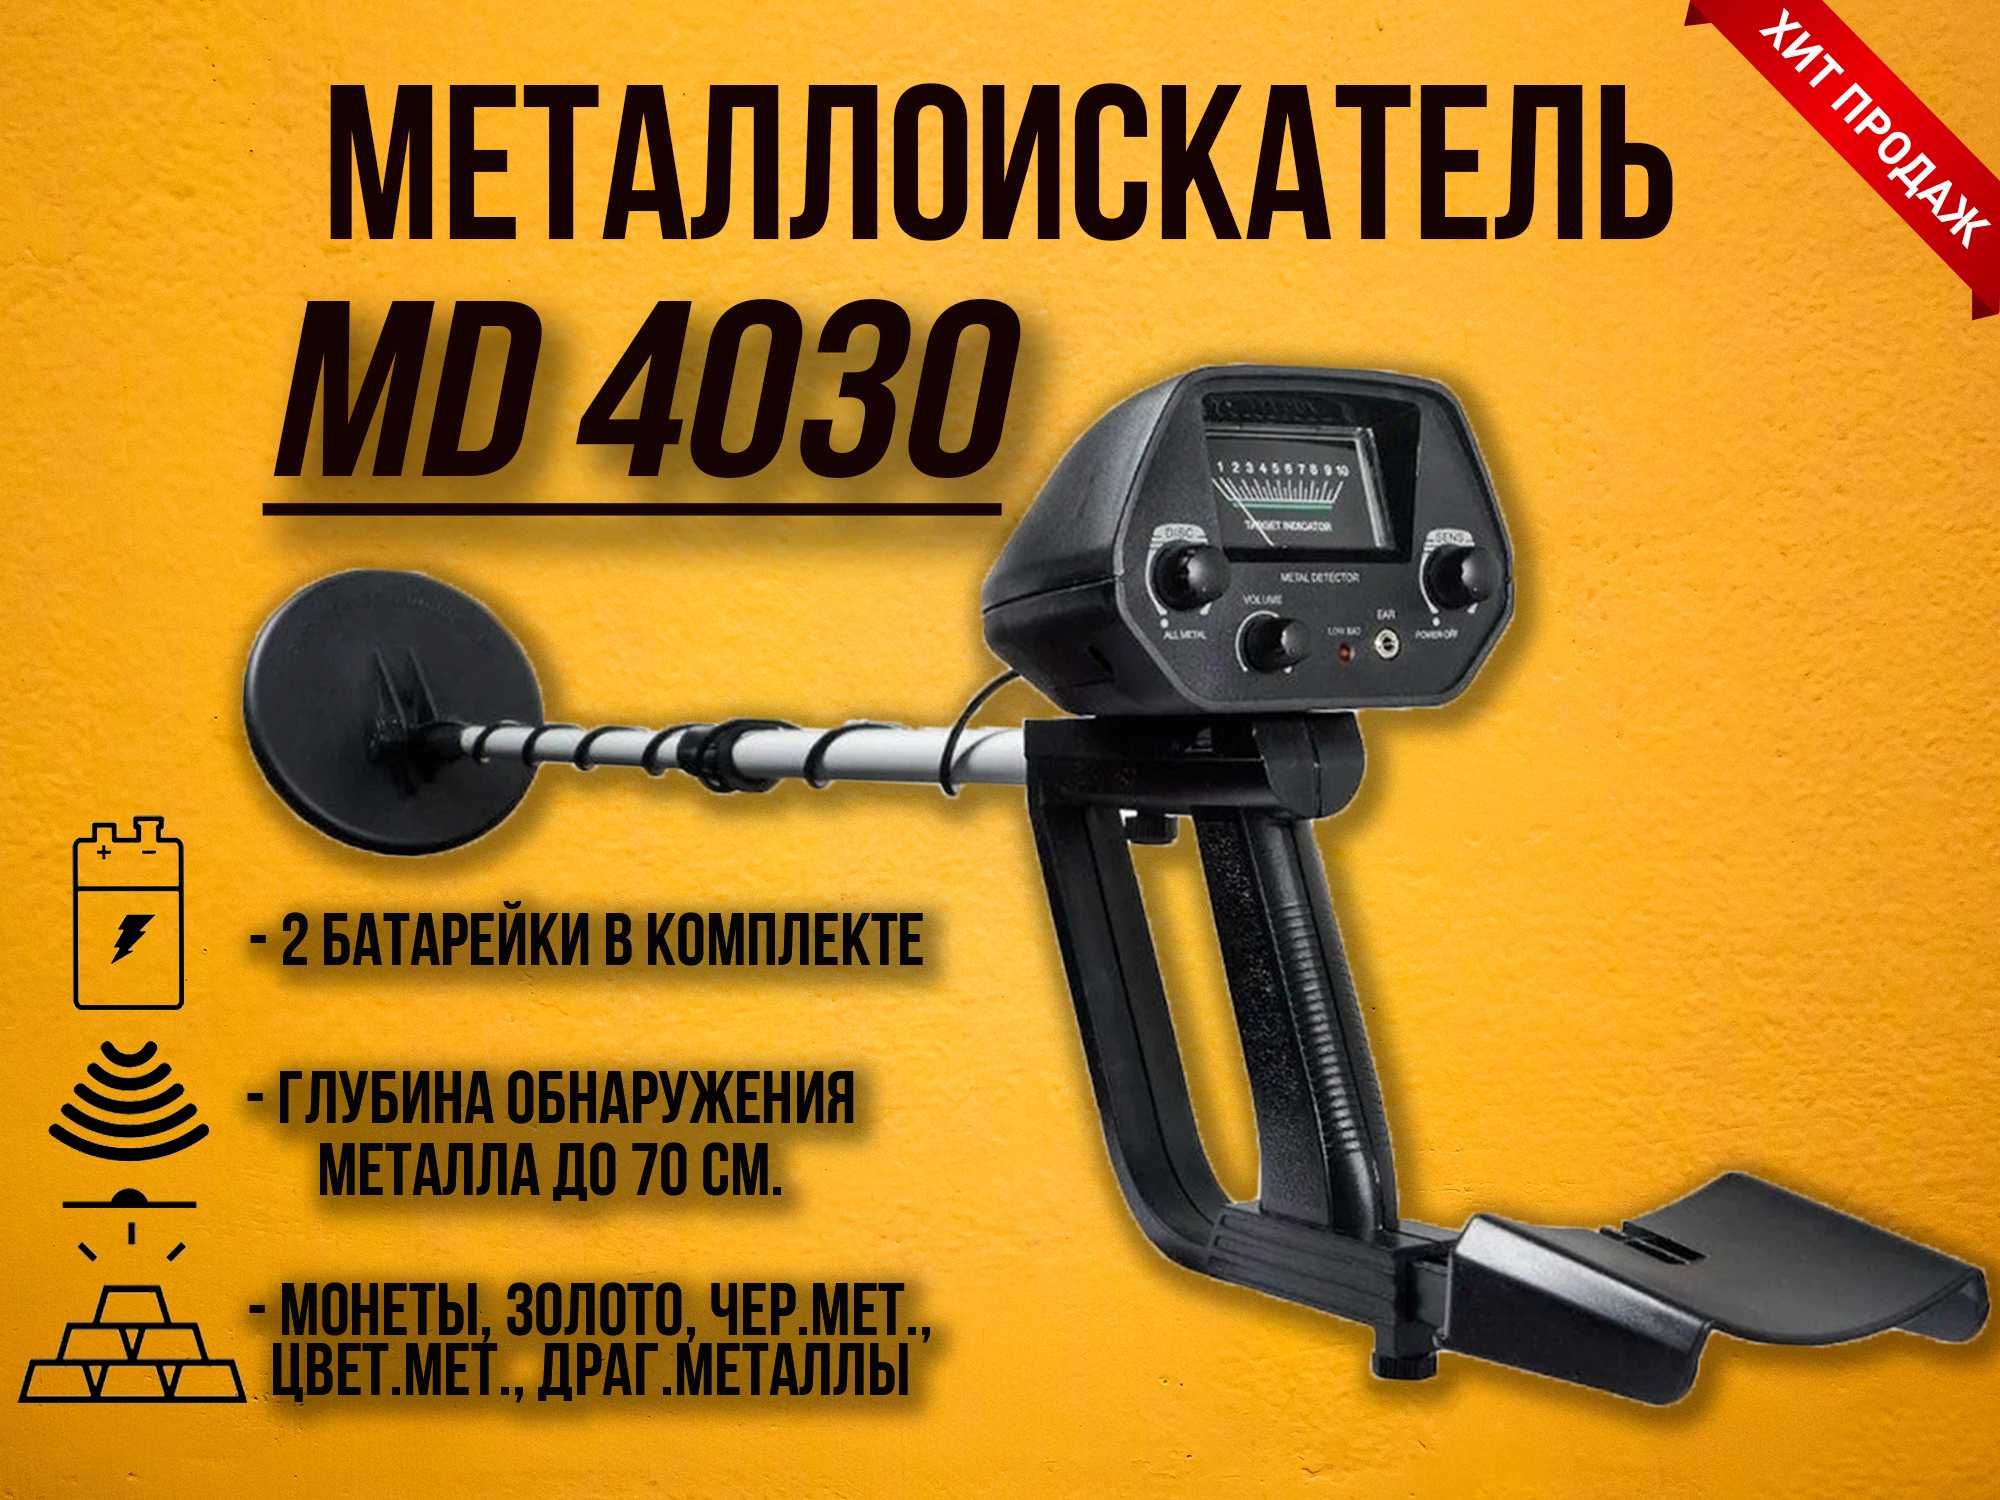 Распродажа металоискатель MD 4030 МД 4030 металлоискатель металл